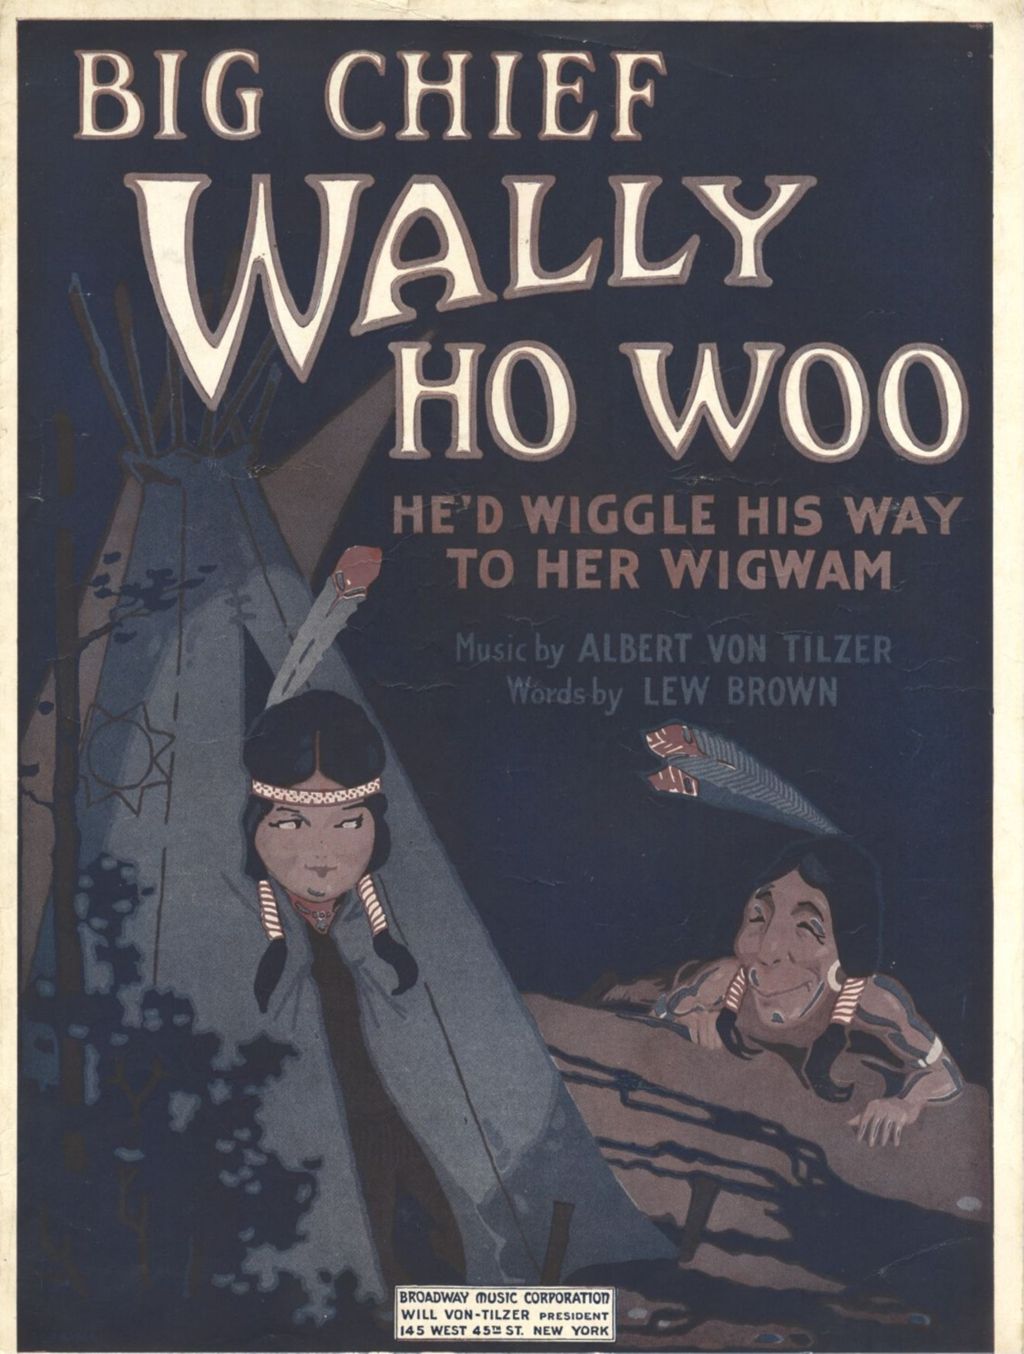 Miniature of Big Chief Wally Ho Woo (He'd Wiggle His Way to Her Wigwam)